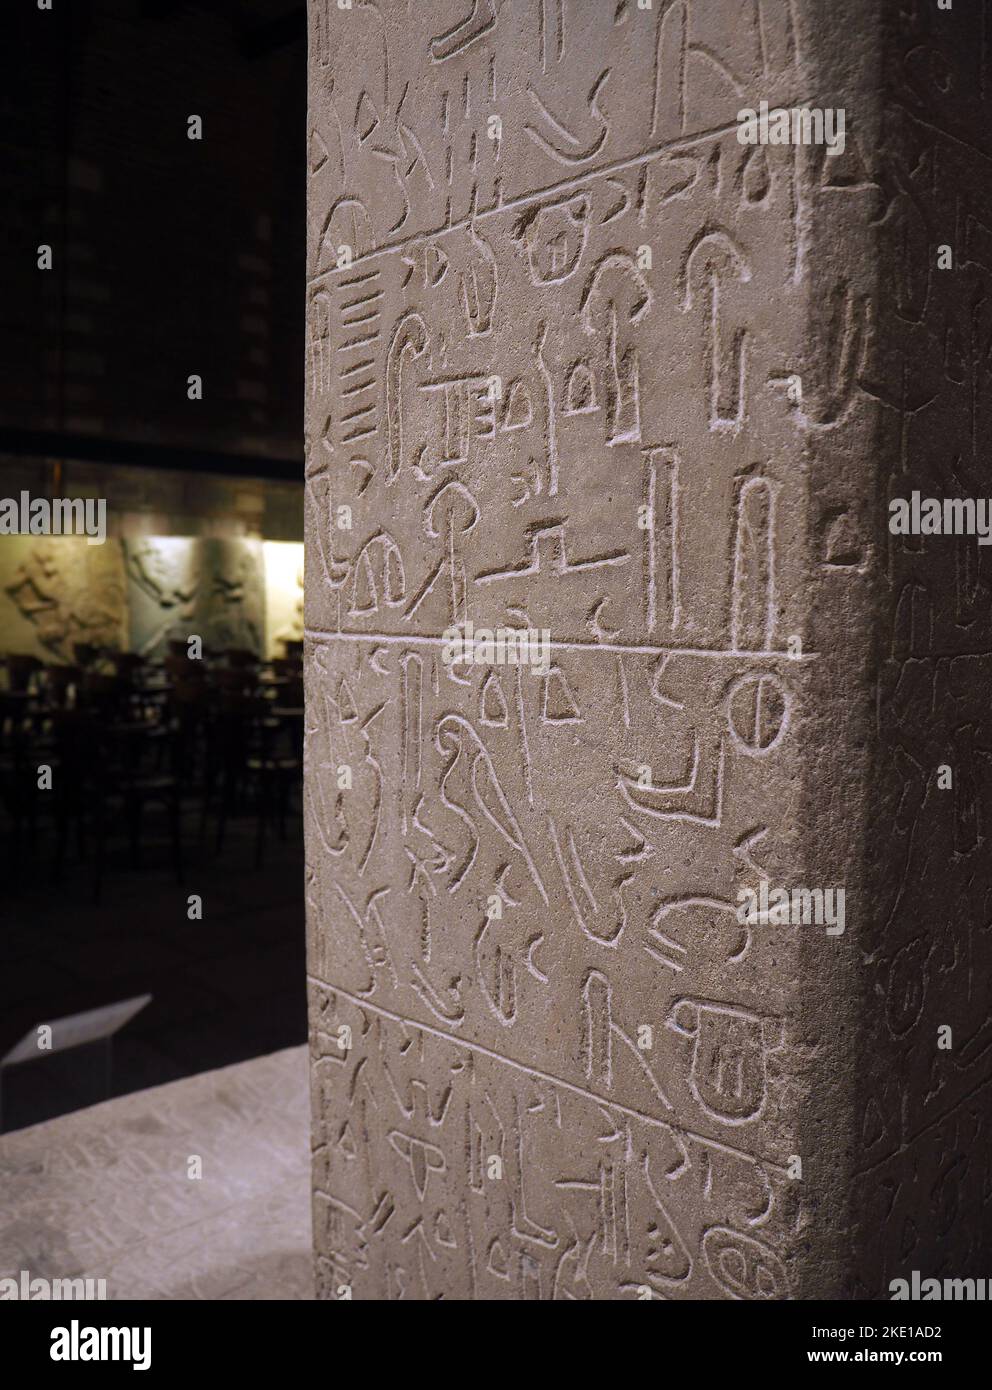 Sultanhanı Monument which inscribed in hieroglyphic Luwian on all sides. Anatolian Civilizations Museum, Ankara, Türkiye - November 2022 Stock Photo